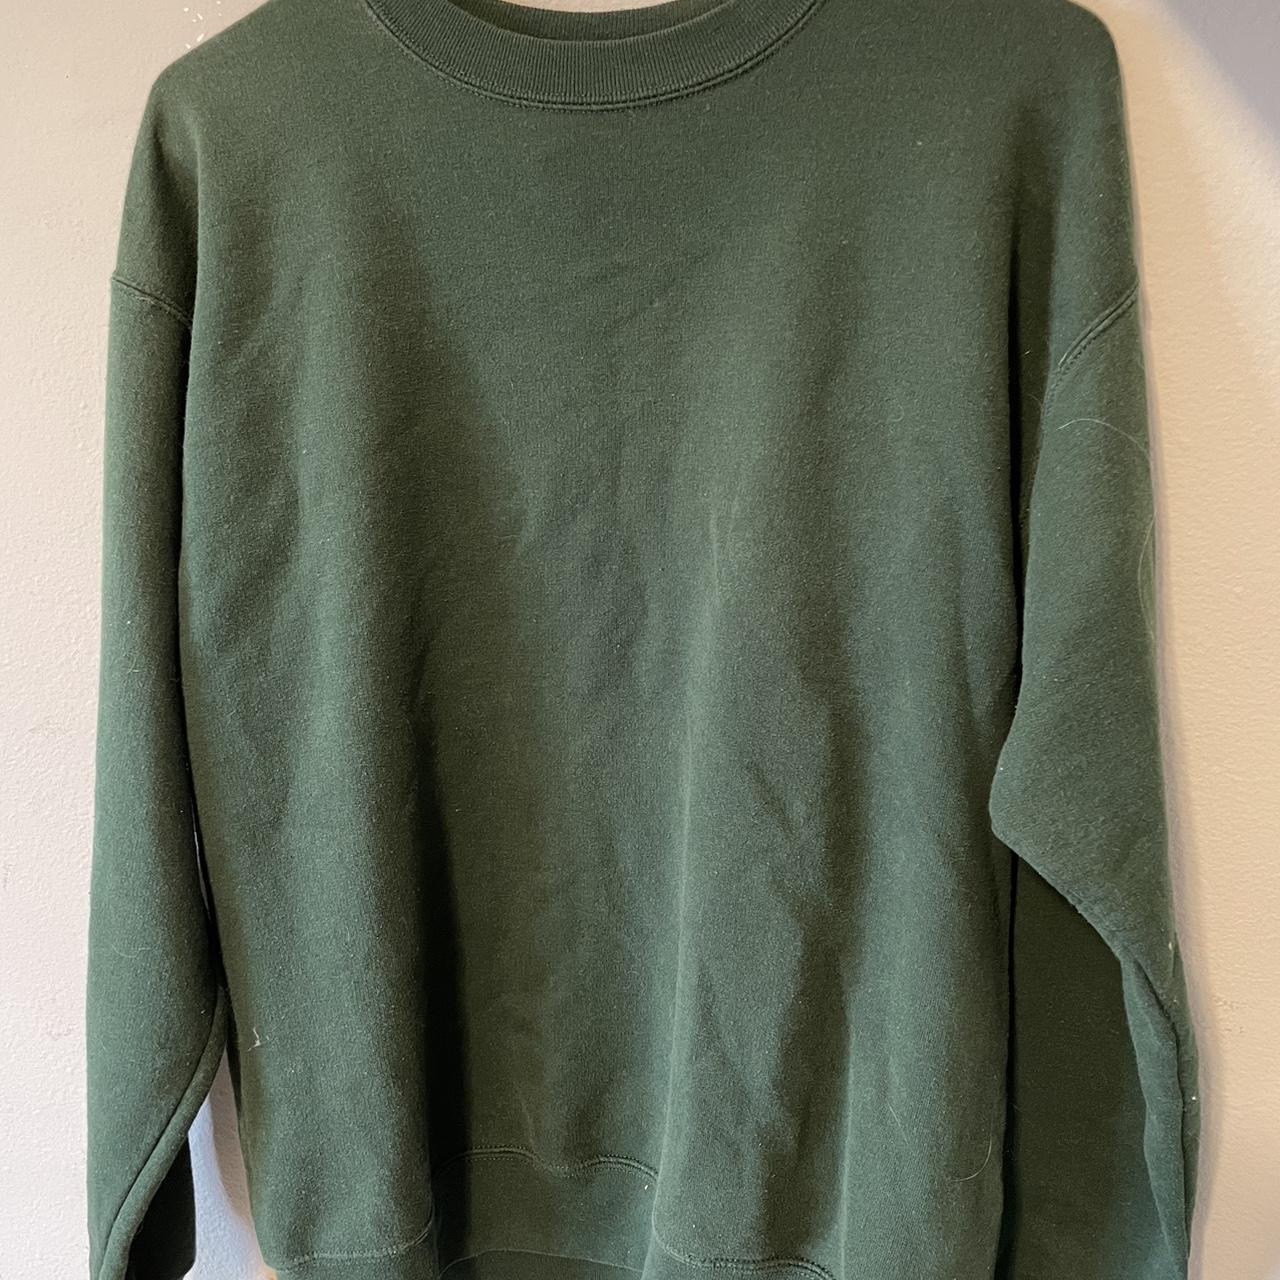 Green Hanes sweater - Depop